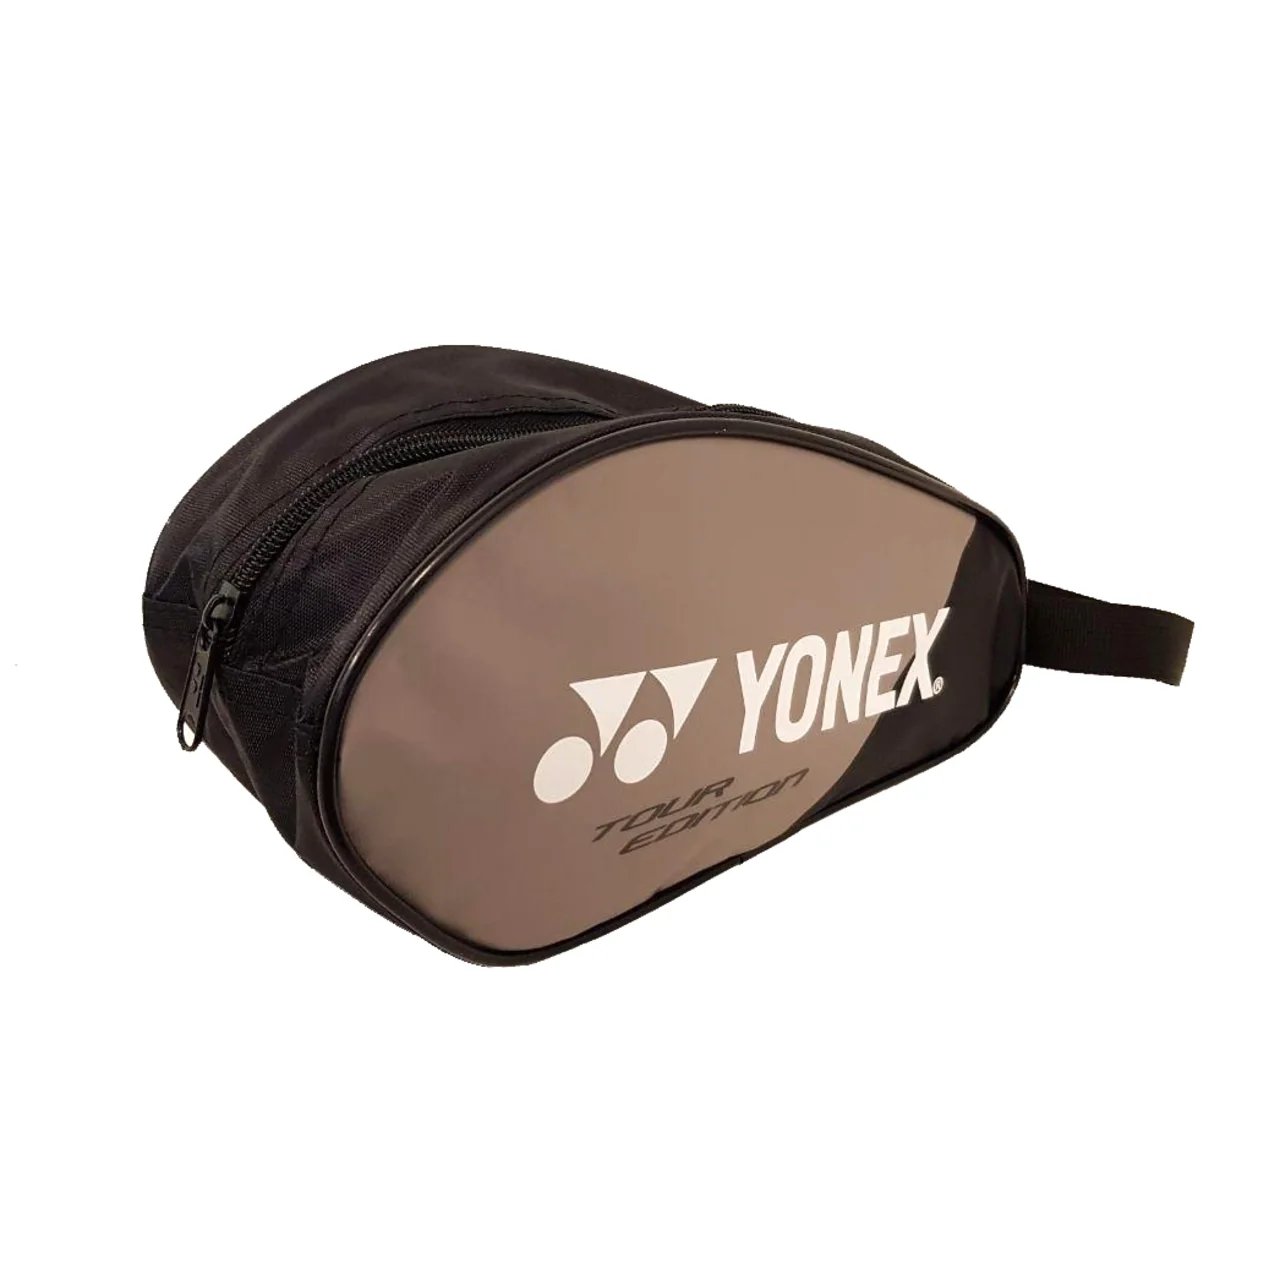 Yonex Toilet Bag Infinite Platinum